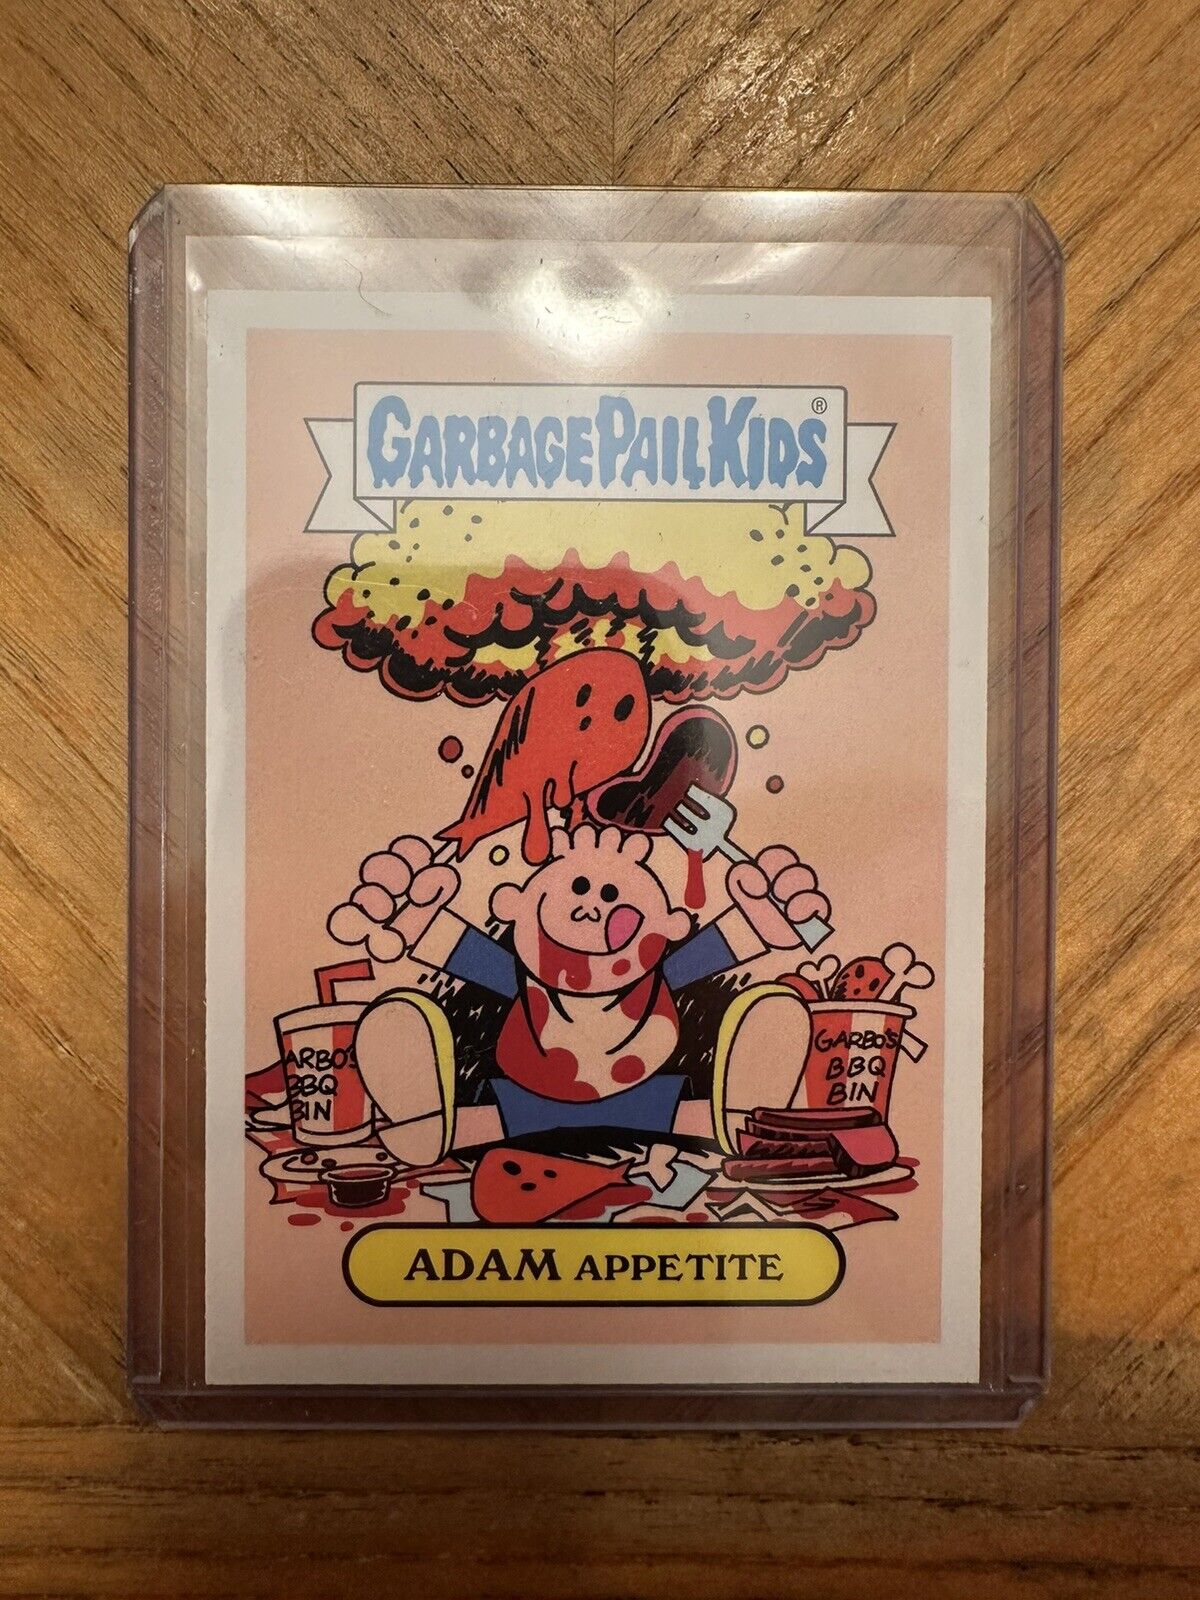 Garbage Pail Kids Food Fight Digital GPK Pack Redemption Card ADAM APPETITE